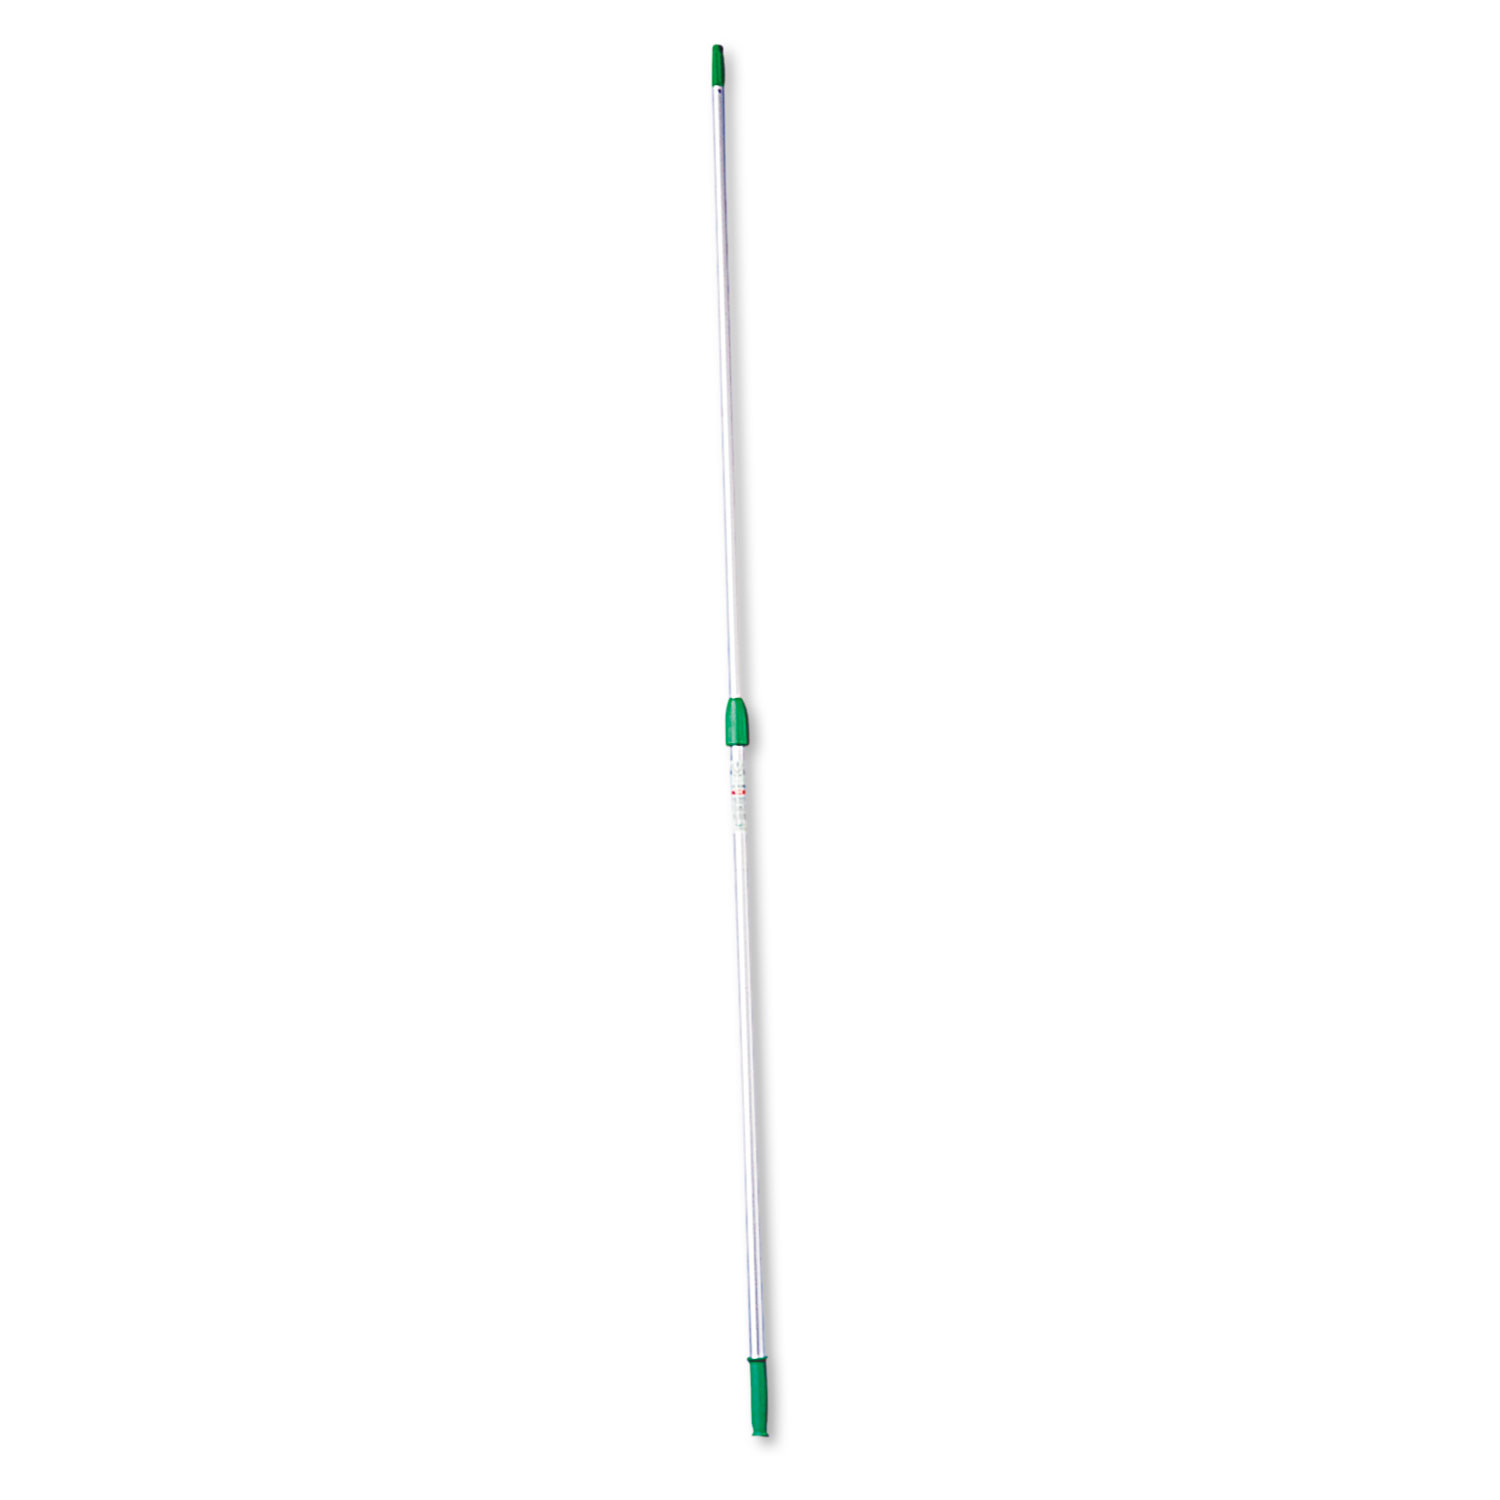  Unger EZ250 Opti-Loc Aluminum Extension Pole, 8ft, Two Sections, Green/Silver (UNGEZ250) 